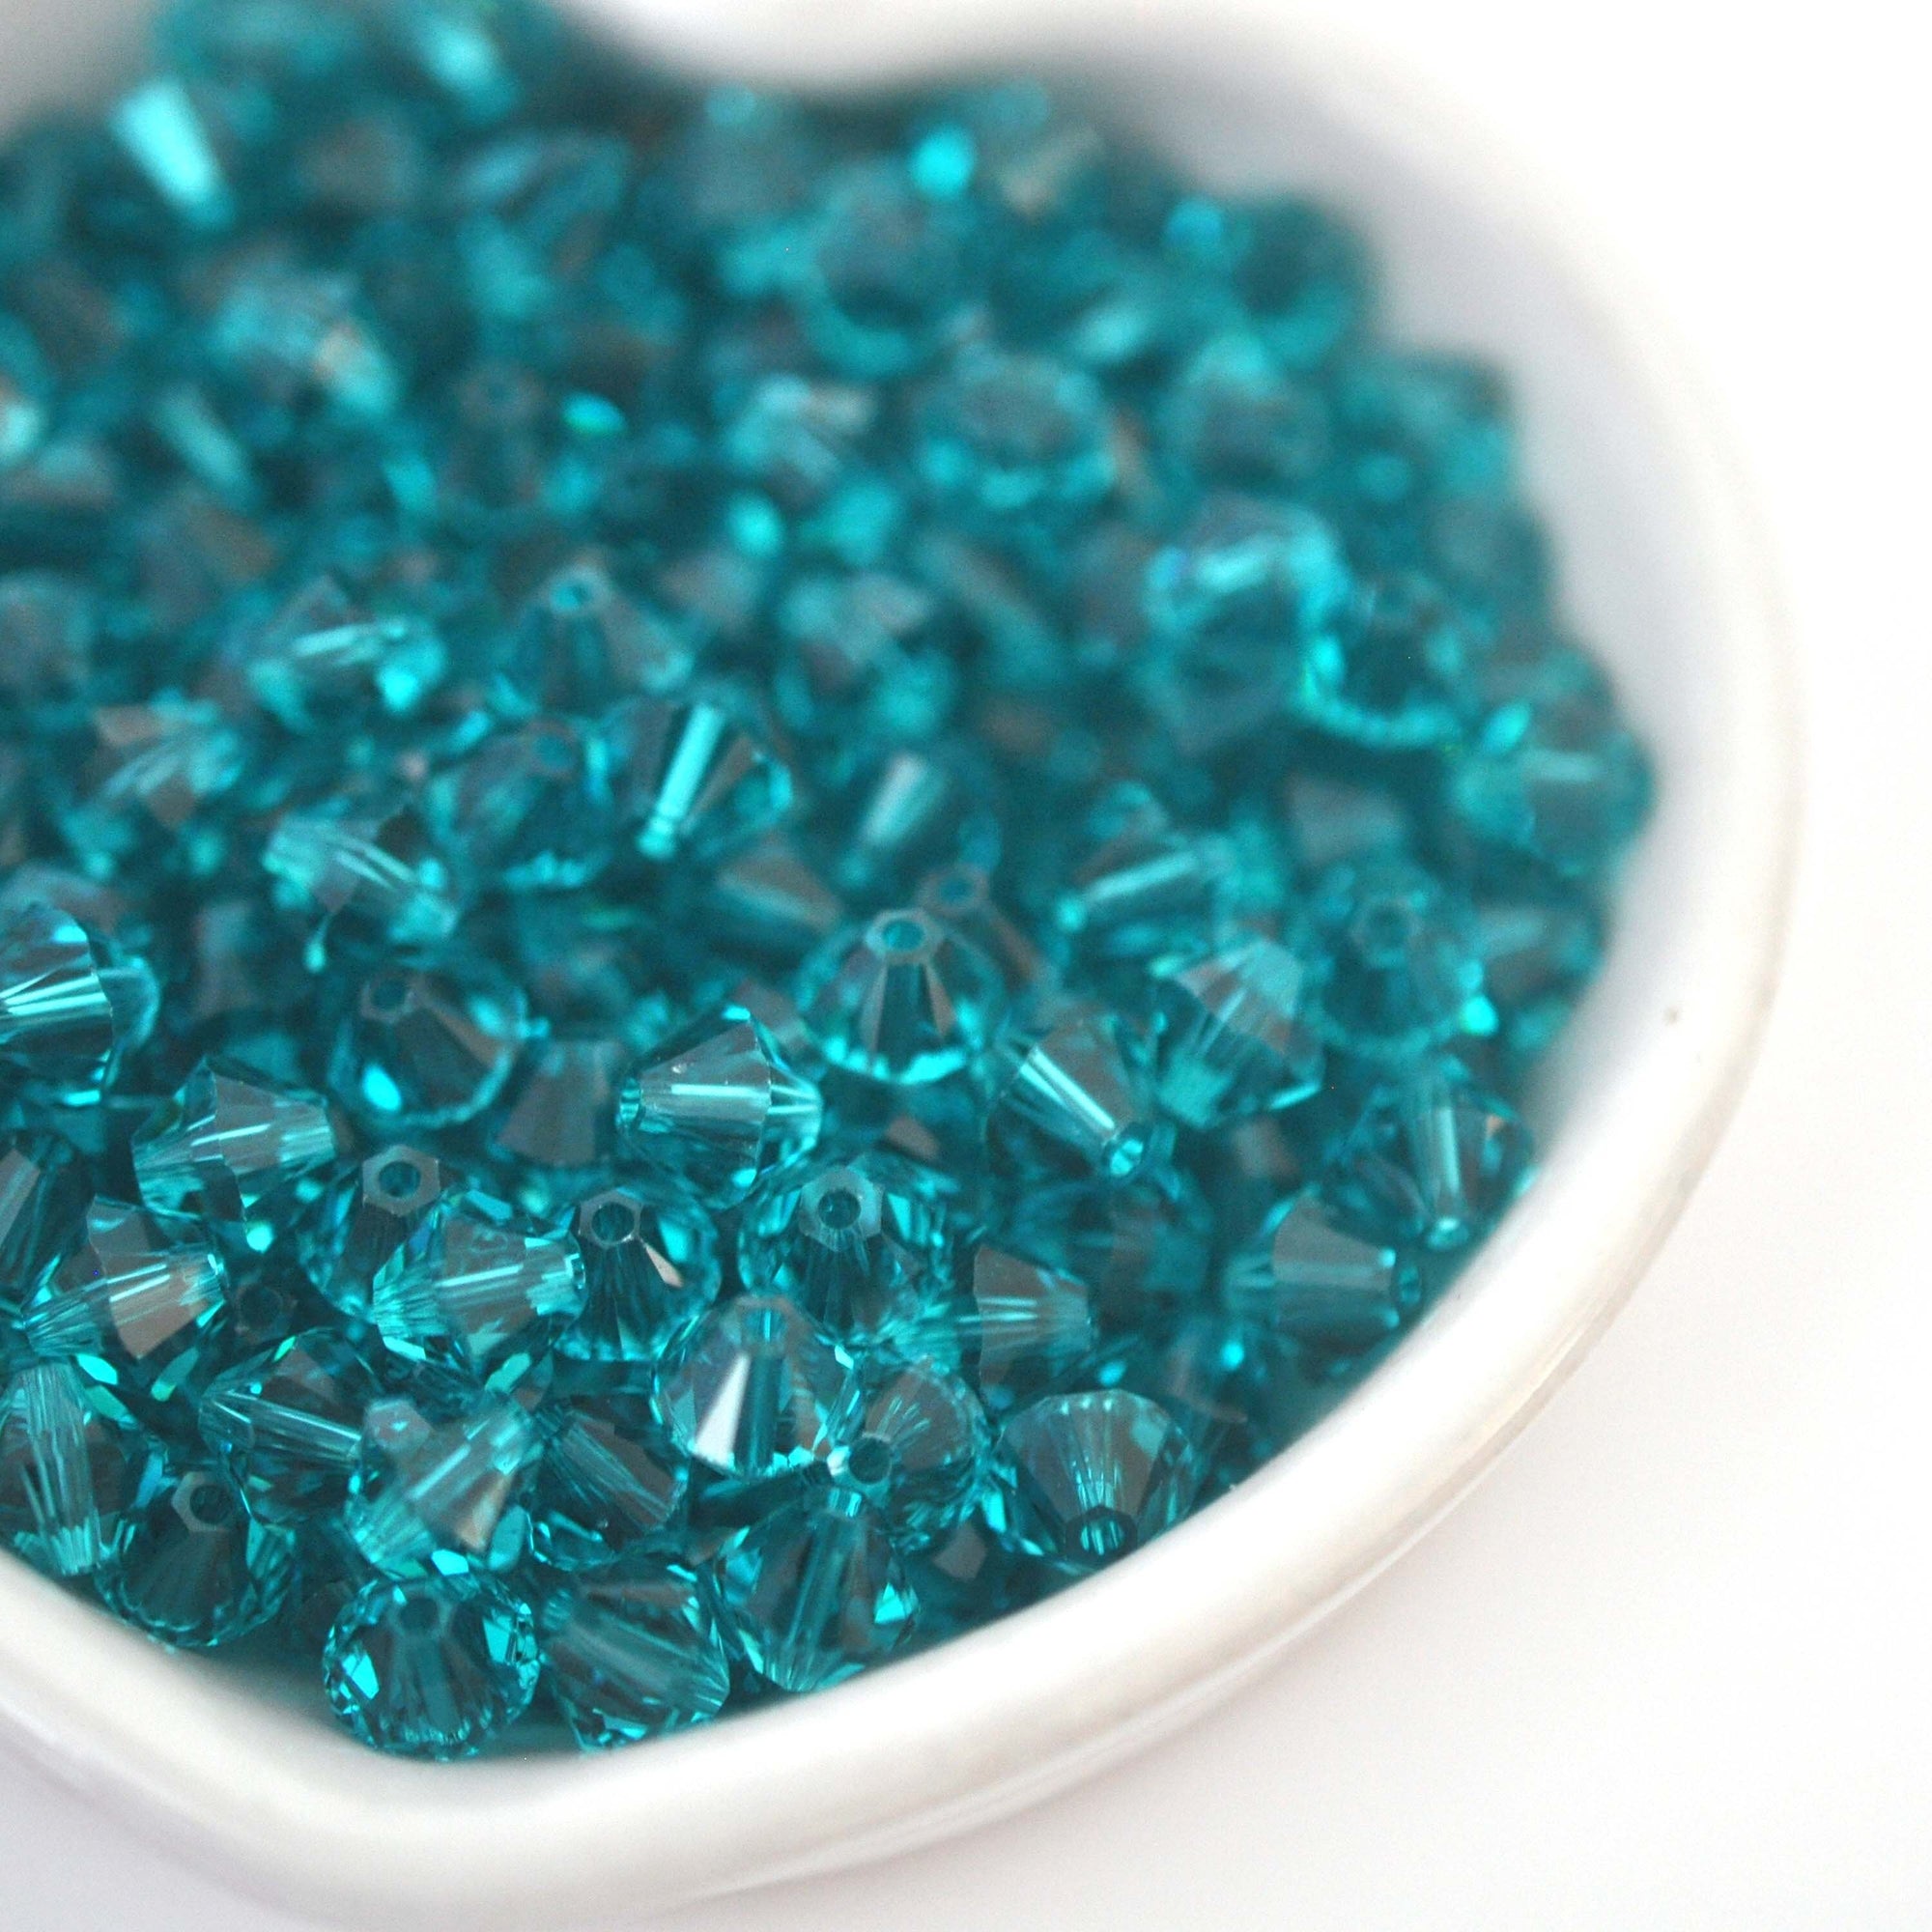 Blue Zircon Bicone Beads 5328 Barton Crystal 6mm